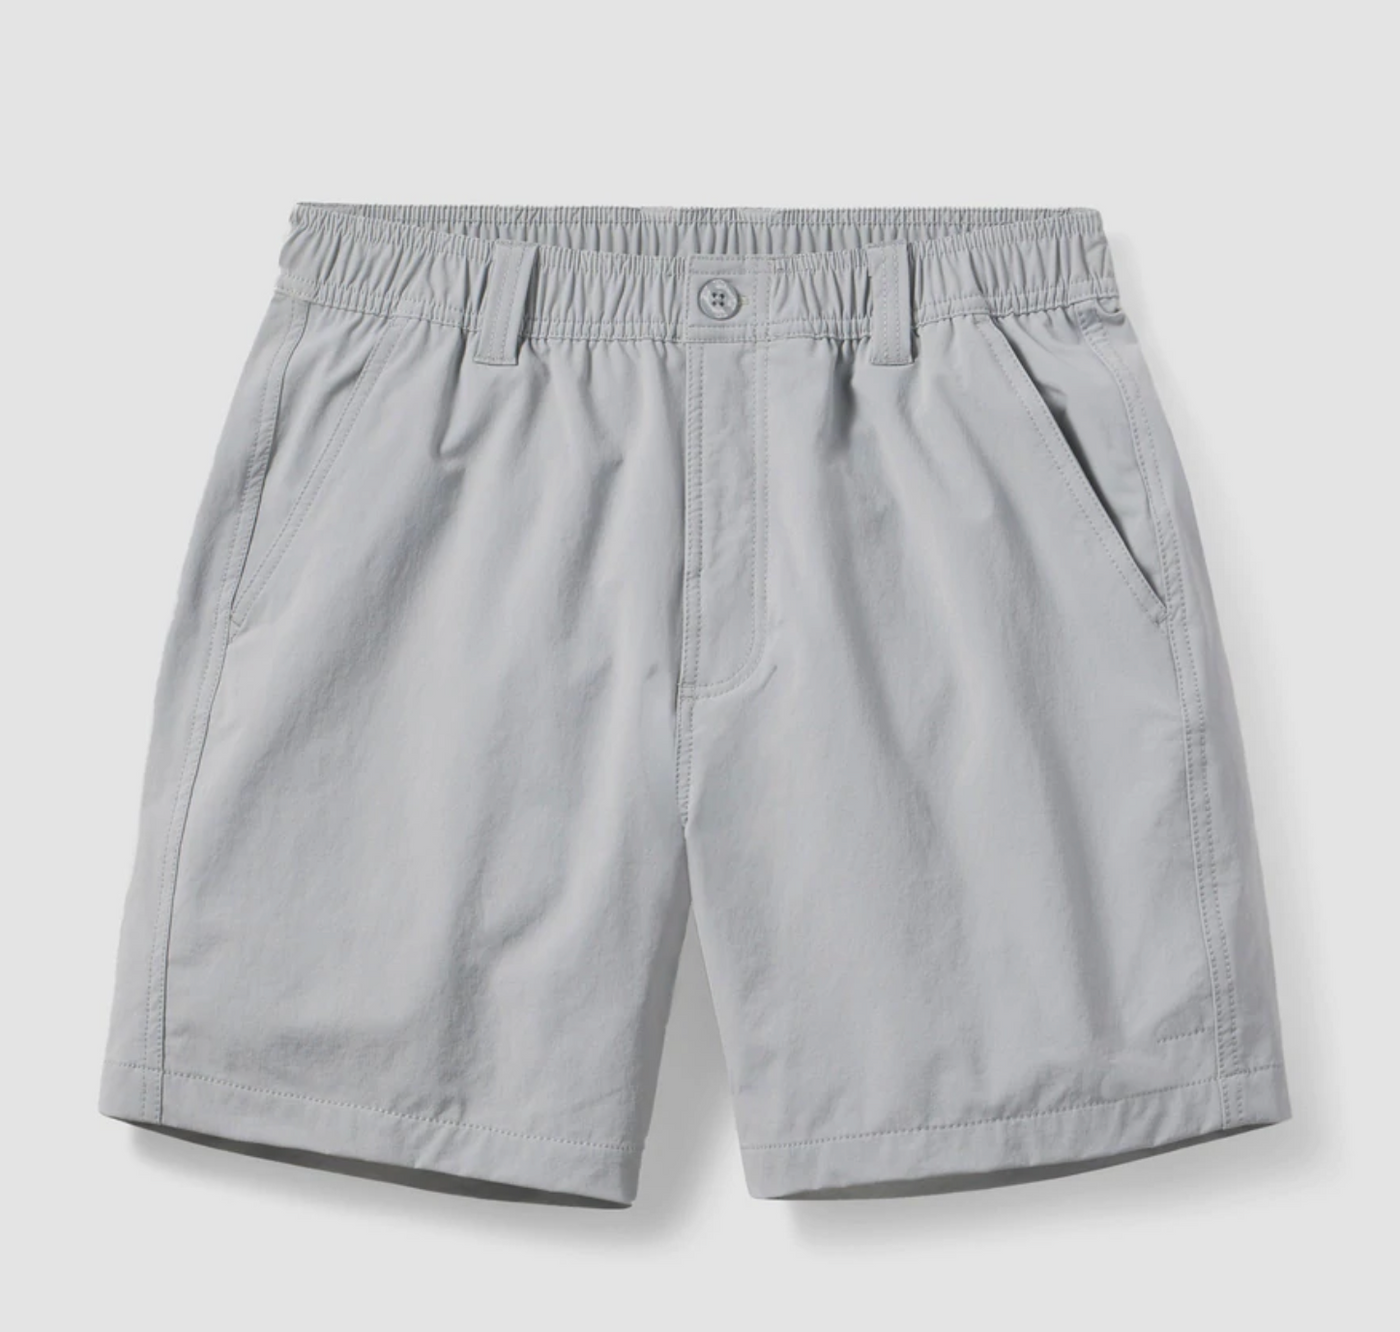 Southern Shirt Quarry Nomad Shorts